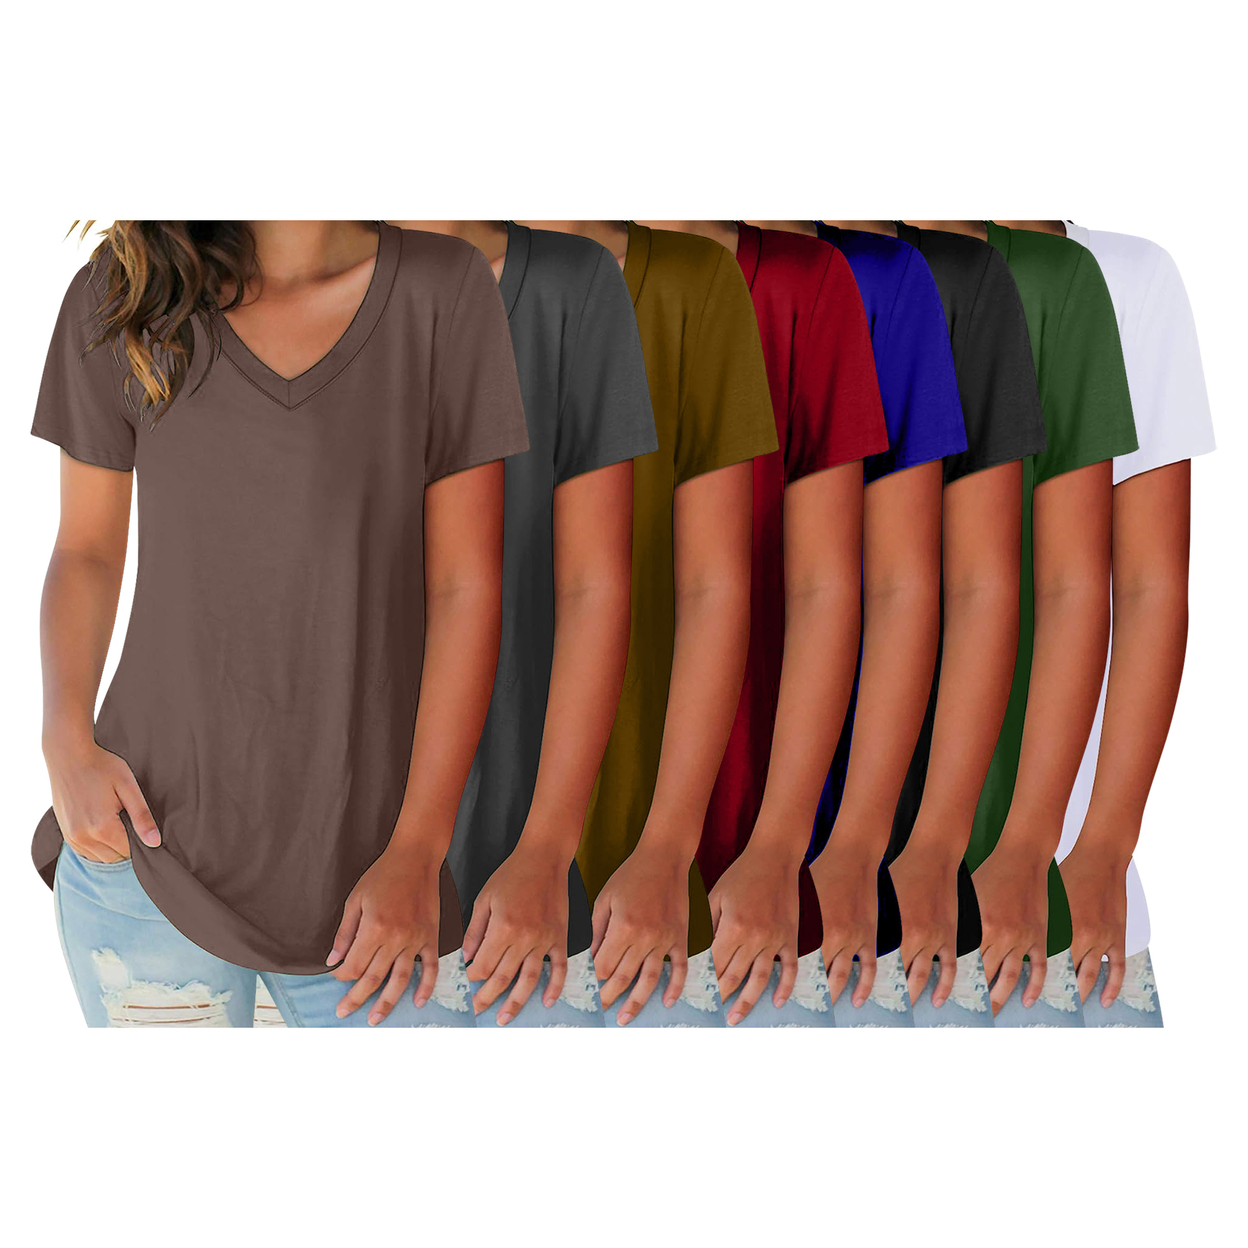 2-Pack: Women's Ultra Soft Smooth Cotton Blend Basic V-Neck Short Sleeve Shirts - Navy & Red, Large